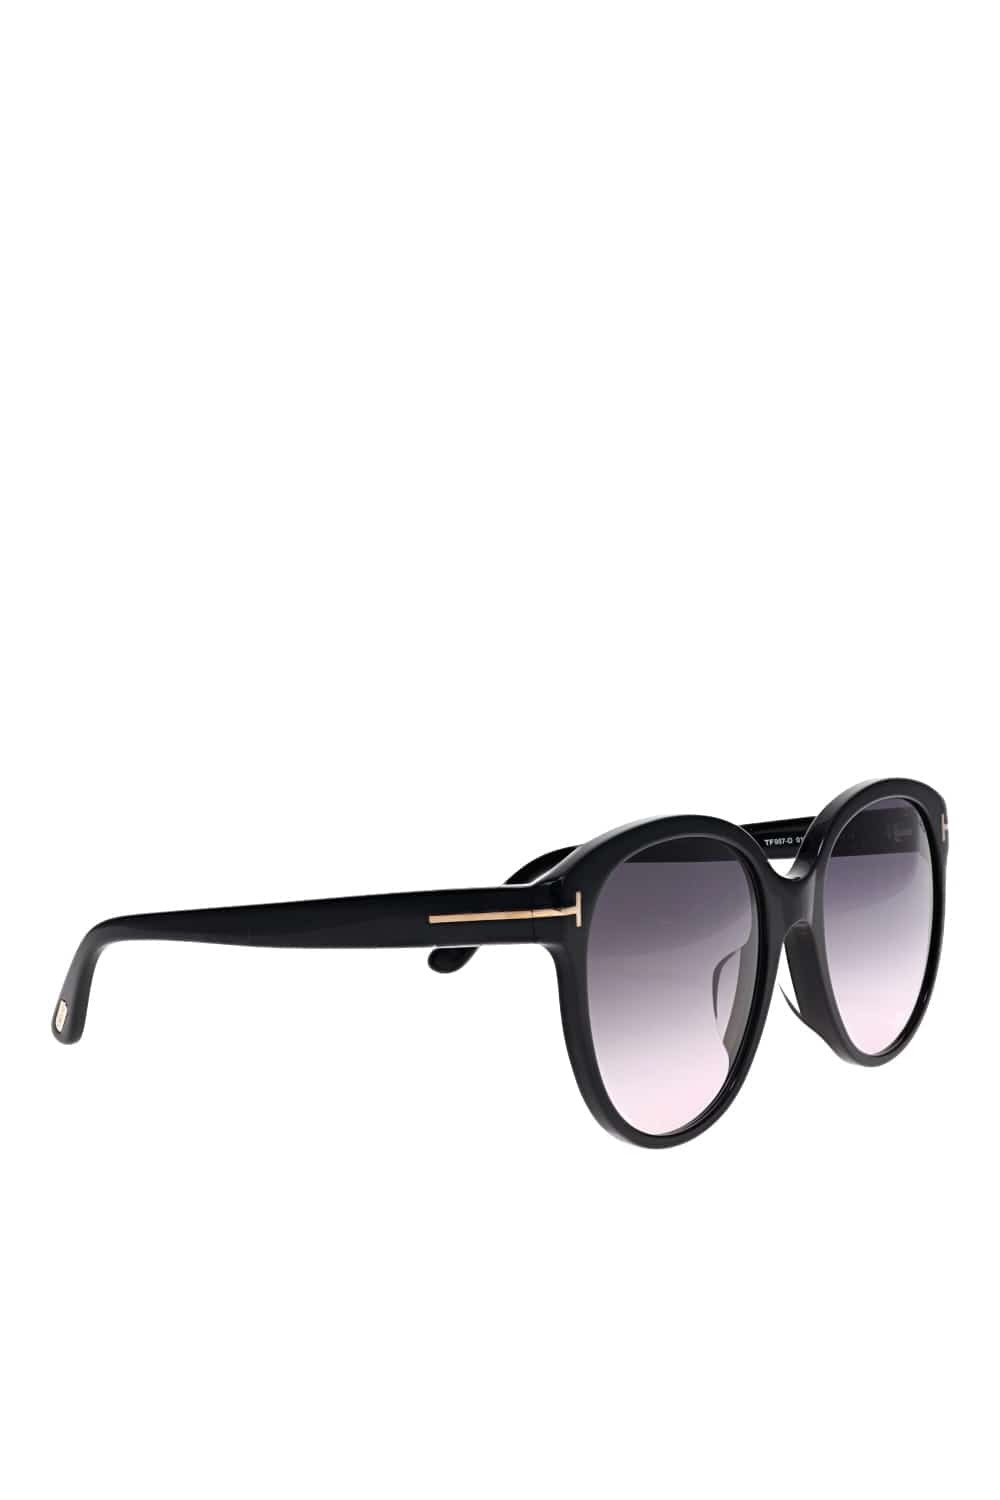 Tom Ford Eyewear FT0957-D Shiny Black Pink Sunglasses FT0957-D Black/Pink